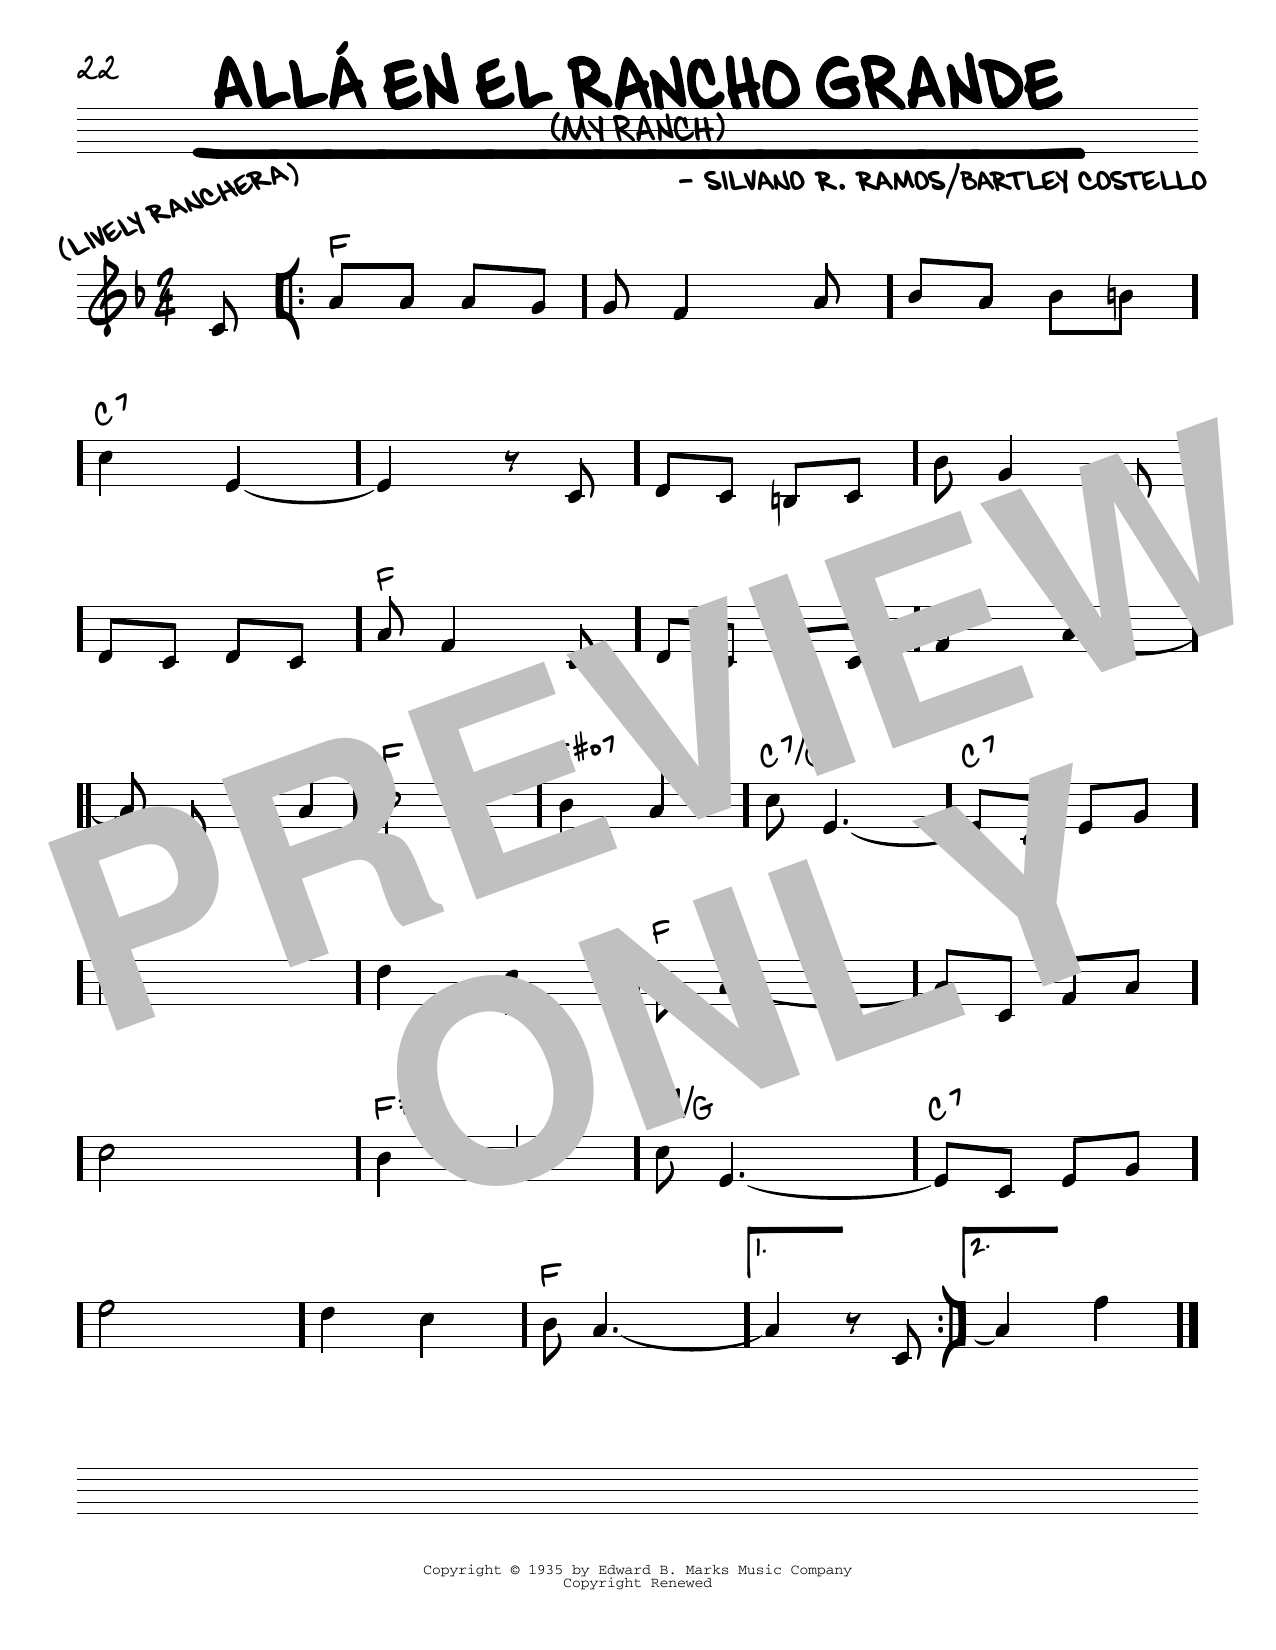 Silvano R. Ramos Alla En El Rancho Grande (My Ranch) Sheet Music Notes & Chords for Piano, Vocal & Guitar Chords (Right-Hand Melody) - Download or Print PDF